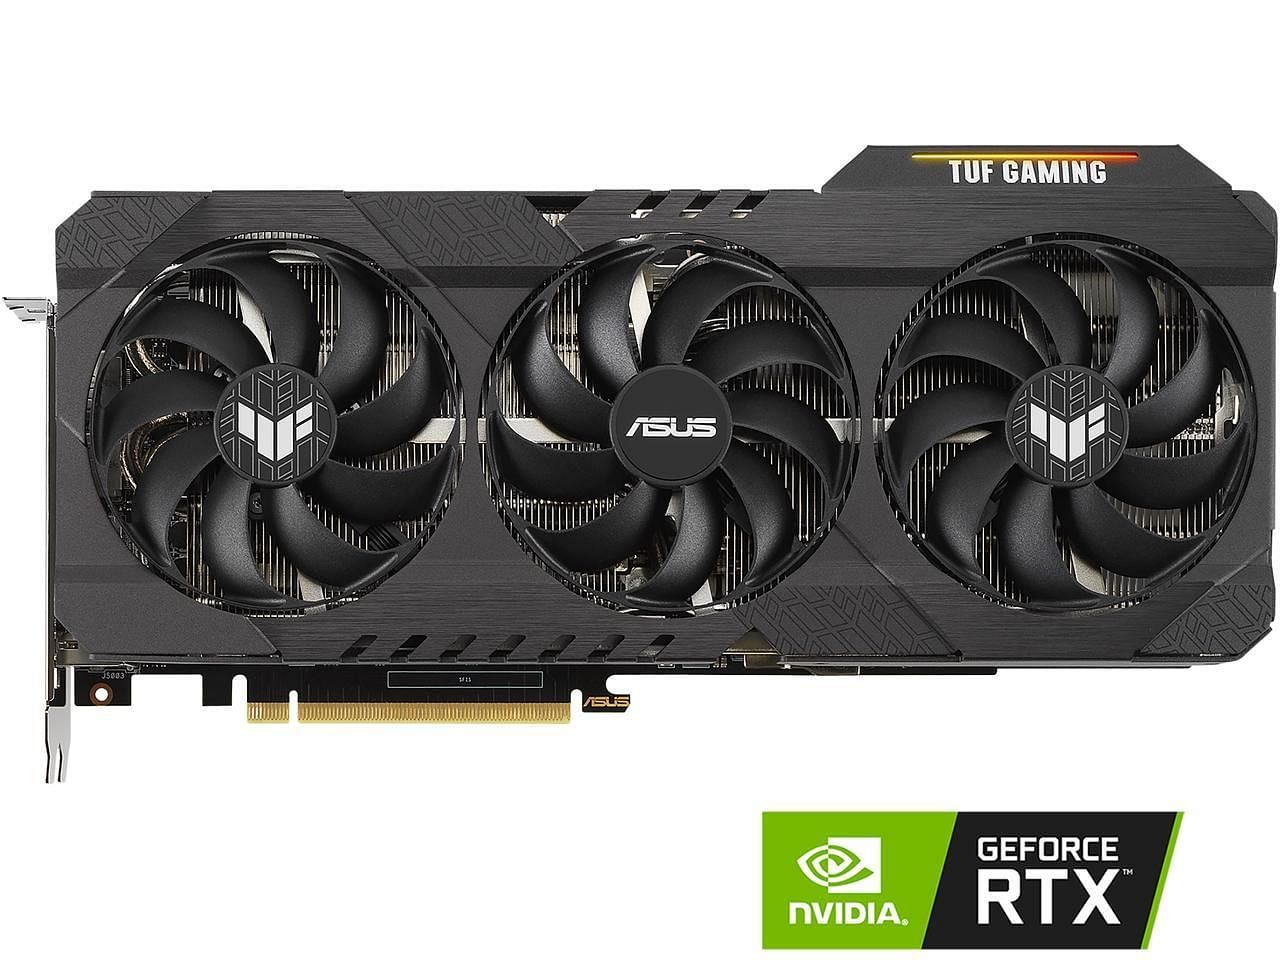 The ASUS TUF Gaming Geforce RTX 3080 Ti GPU (Image via Newegg)